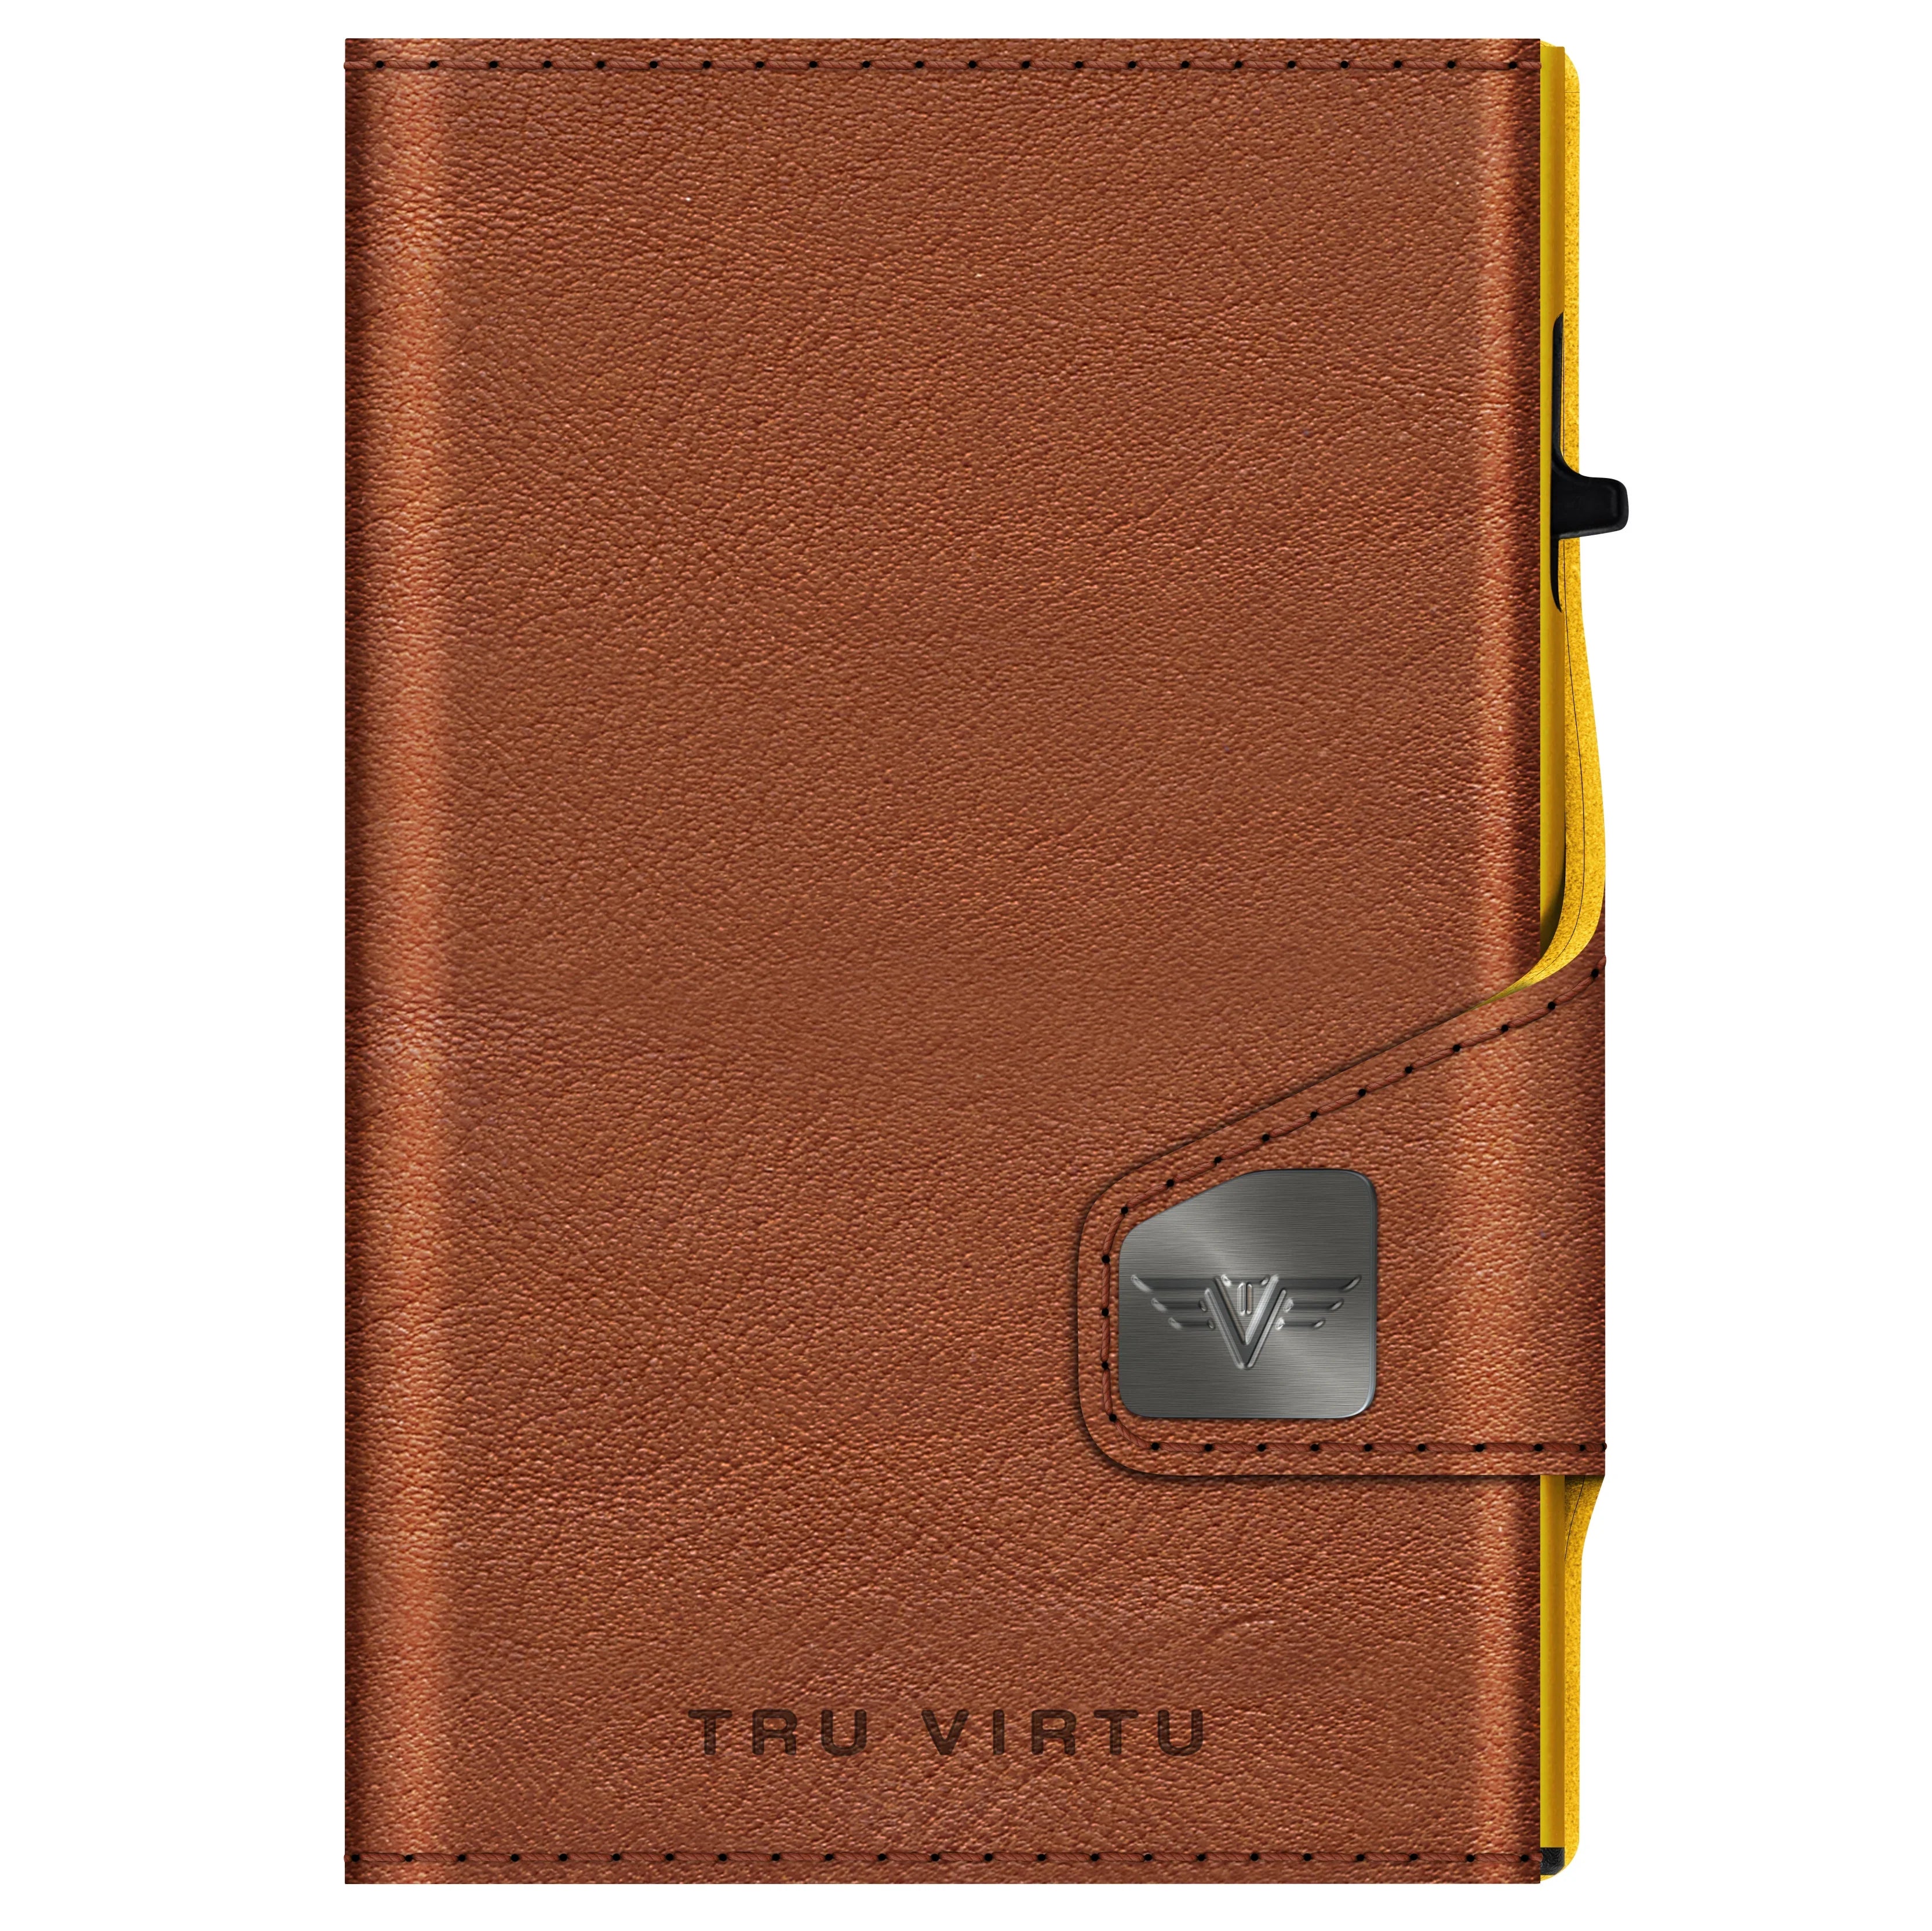 Tru Virtu Special Edition Click & Slide Caramba Portemonnaie 10 cm - Black-Yell/Gold